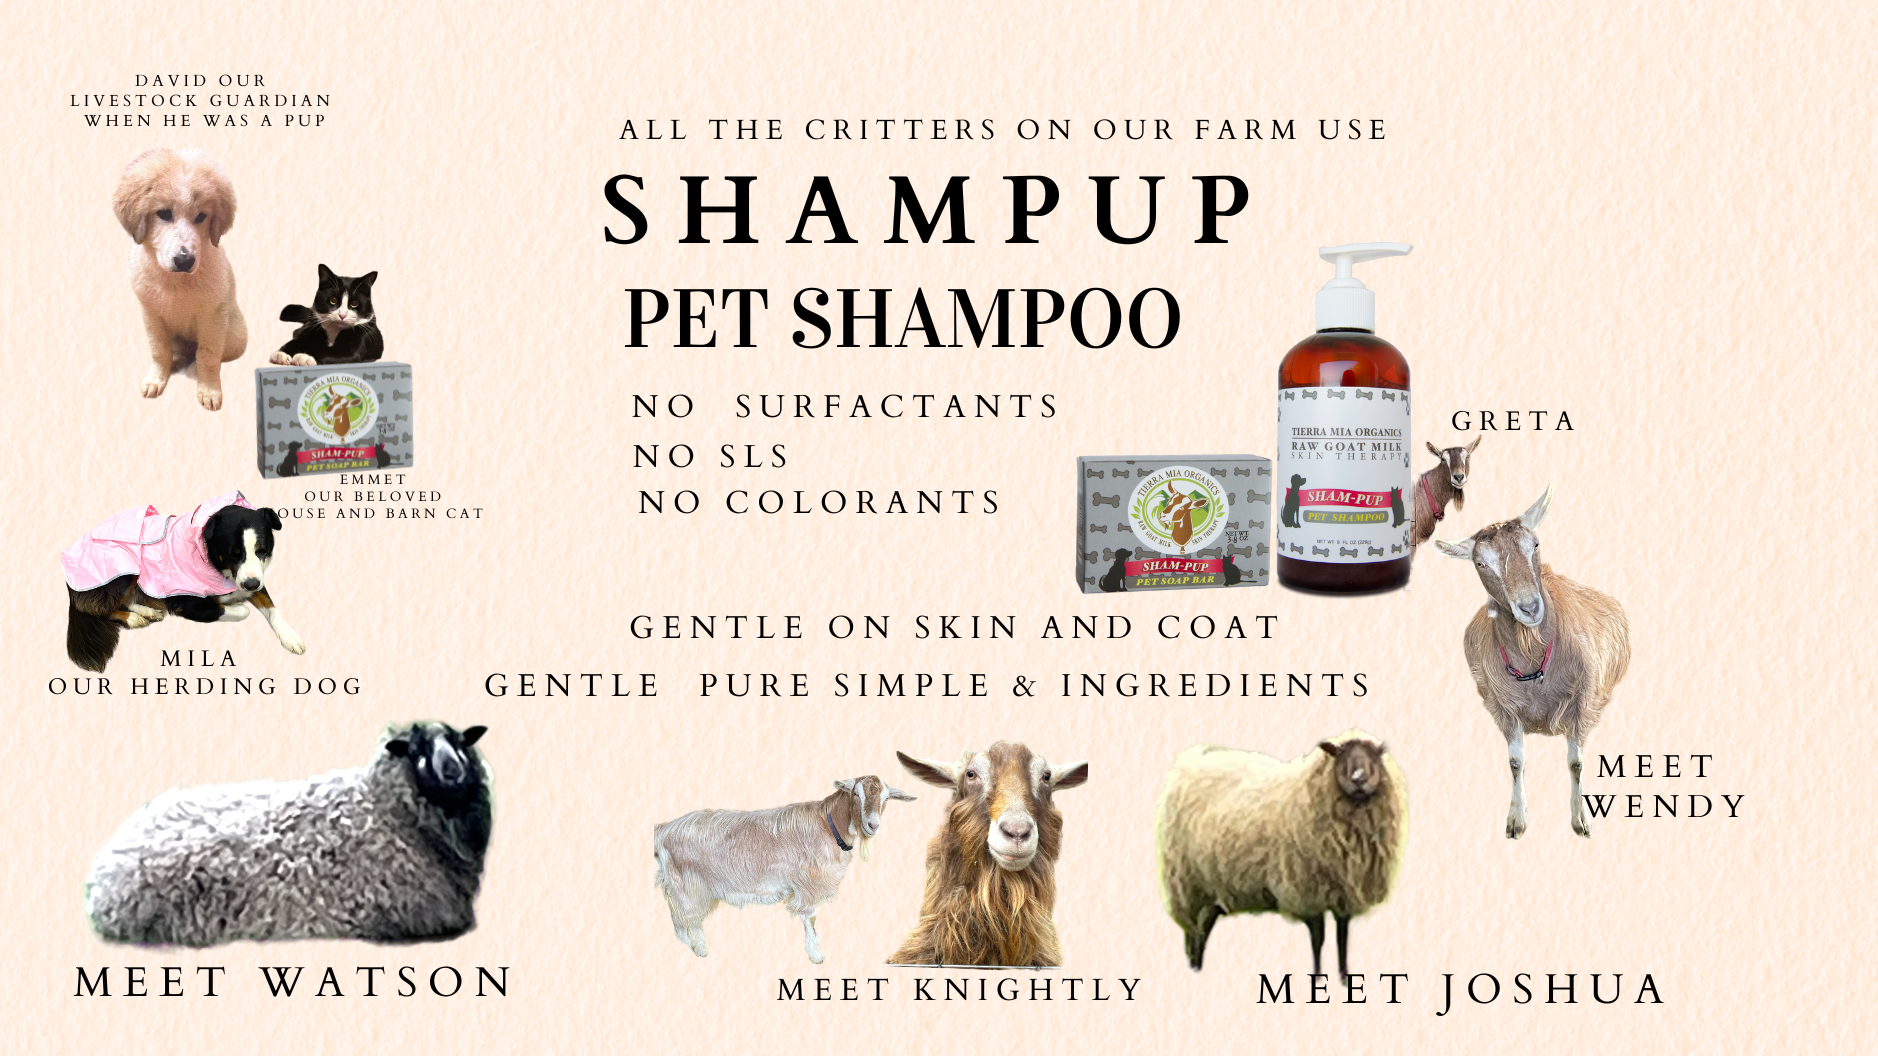 Goat Milk Soap & Shampoo for Pets - Tierra Mia Organics